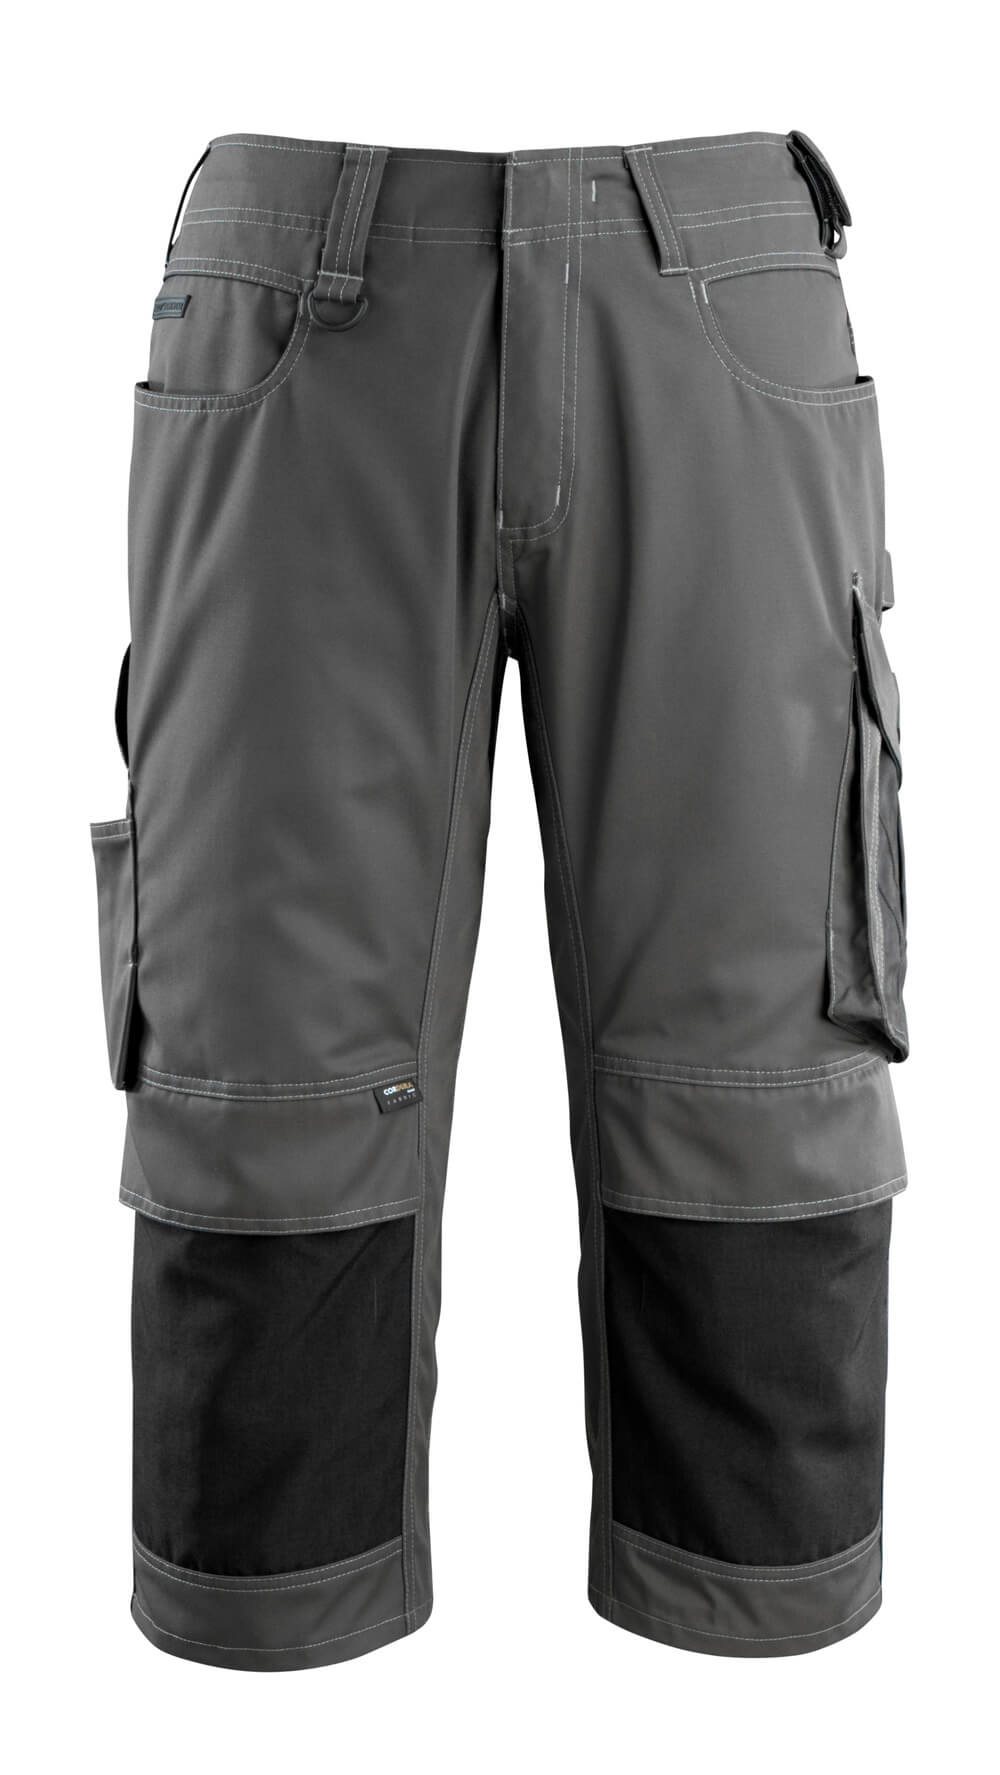 Mascot UNIQUE  Altona ¾ Length Trousers with kneepad pockets 14149 dark anthracite/black